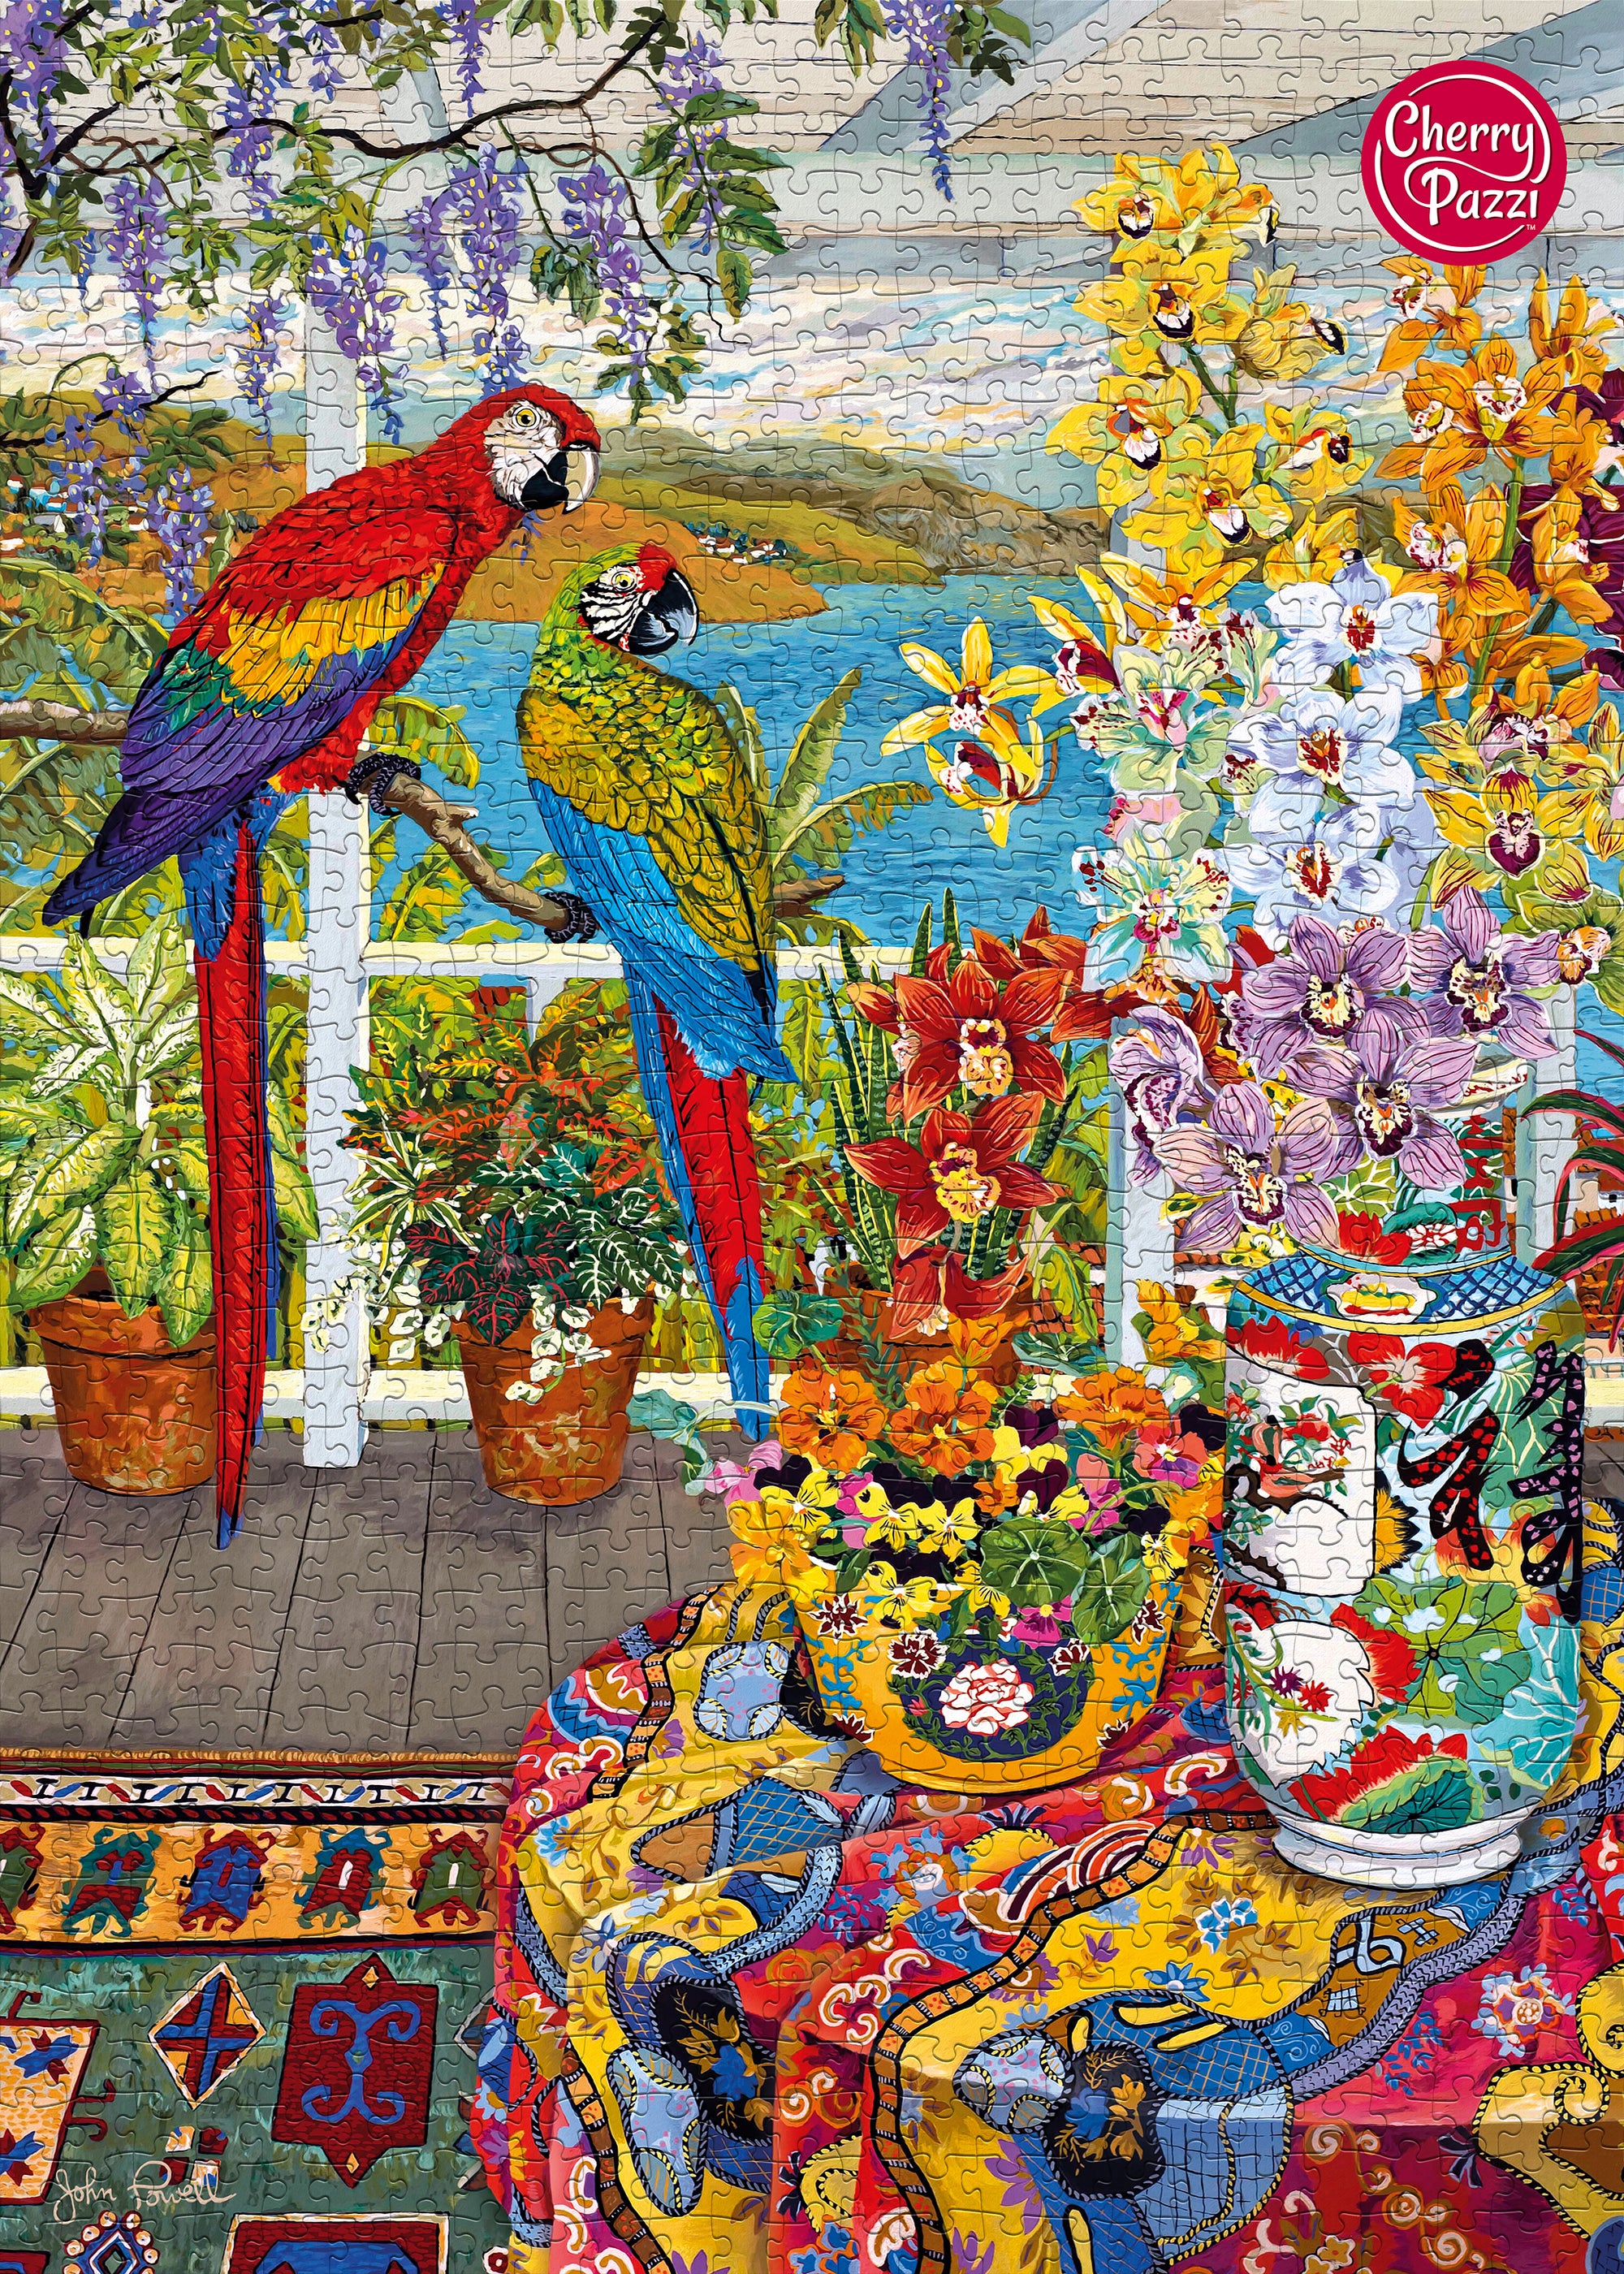 Puzzle 1000 Piezas - Parrots on the Veranda